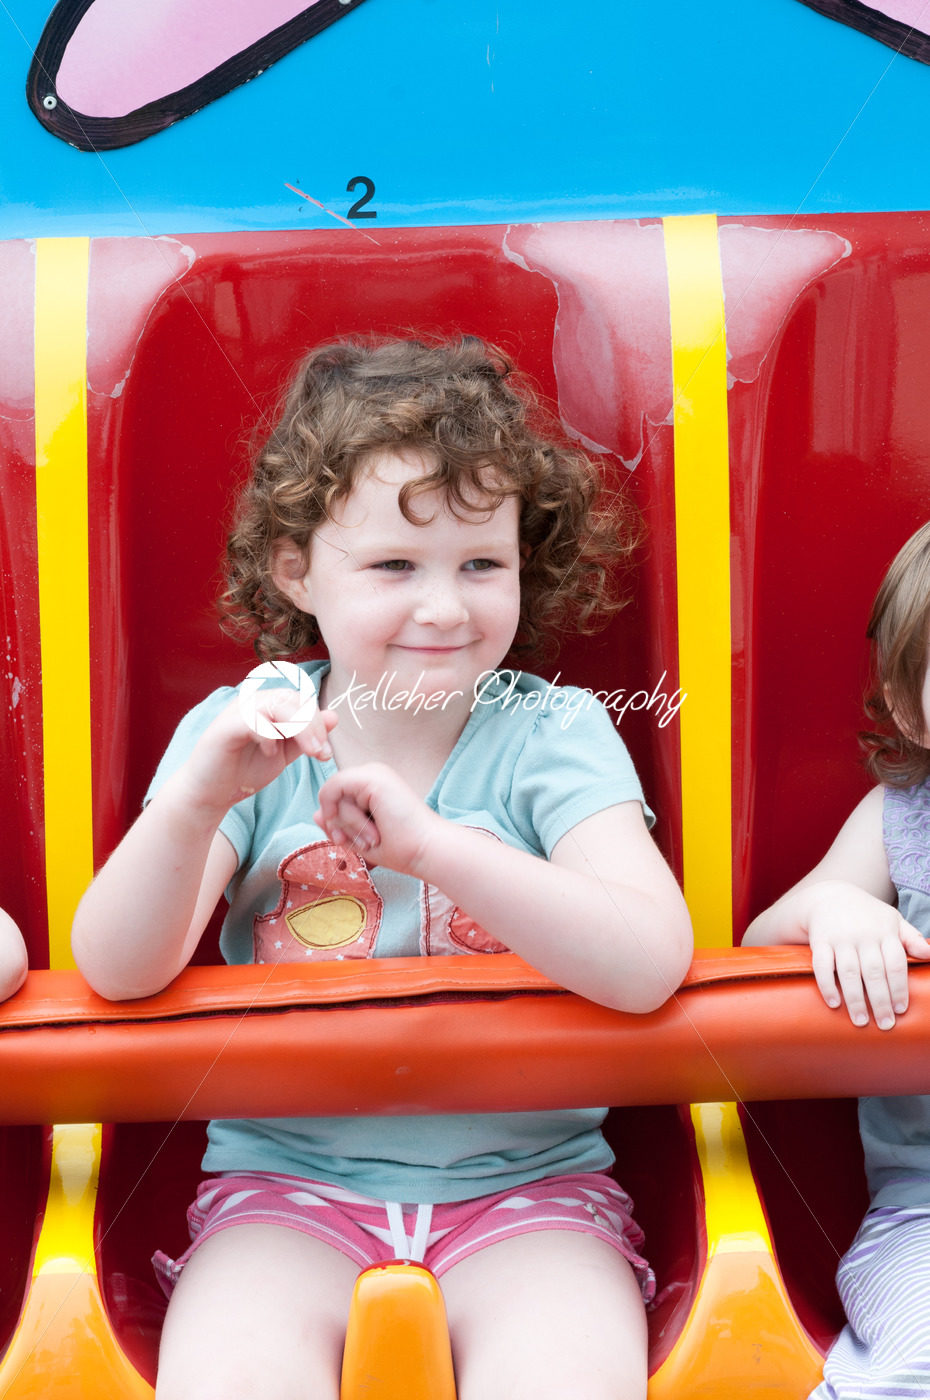 Young toddler girl having fun on boardwalk amusement ride - Kelleher Photography Store